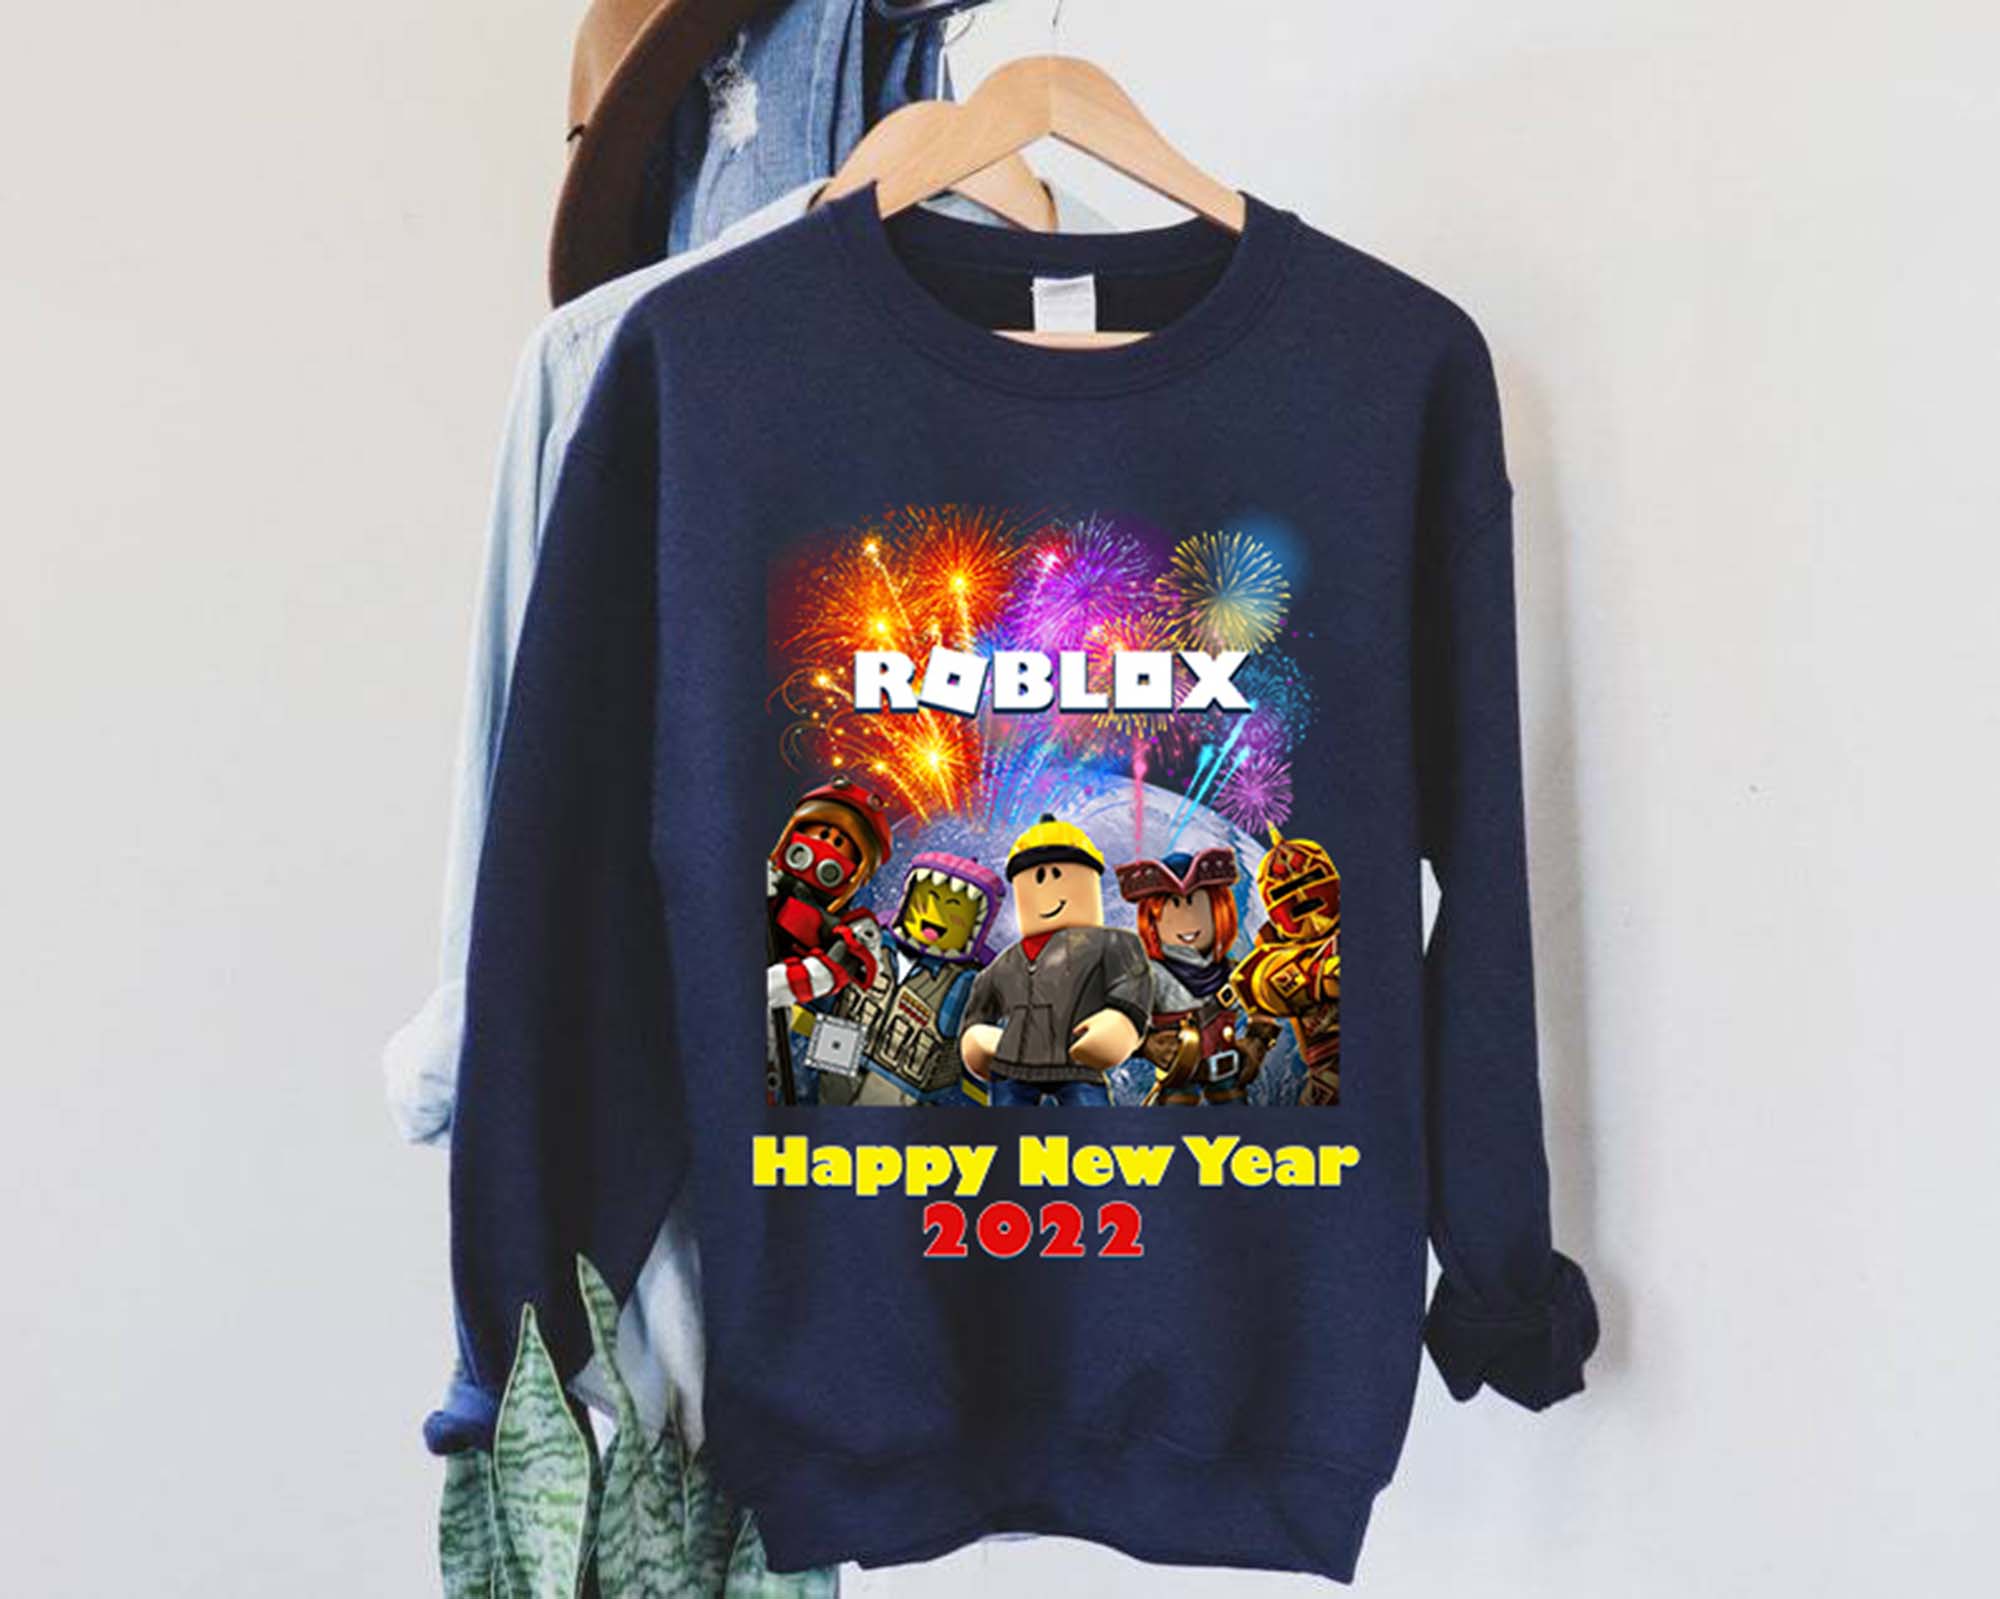 Roblox New Year Shirt, Happy New Year 2022 Shirt, Funny New Year Tee, Game Lover New Year Gift, Kids Family Women Men New Year Gift